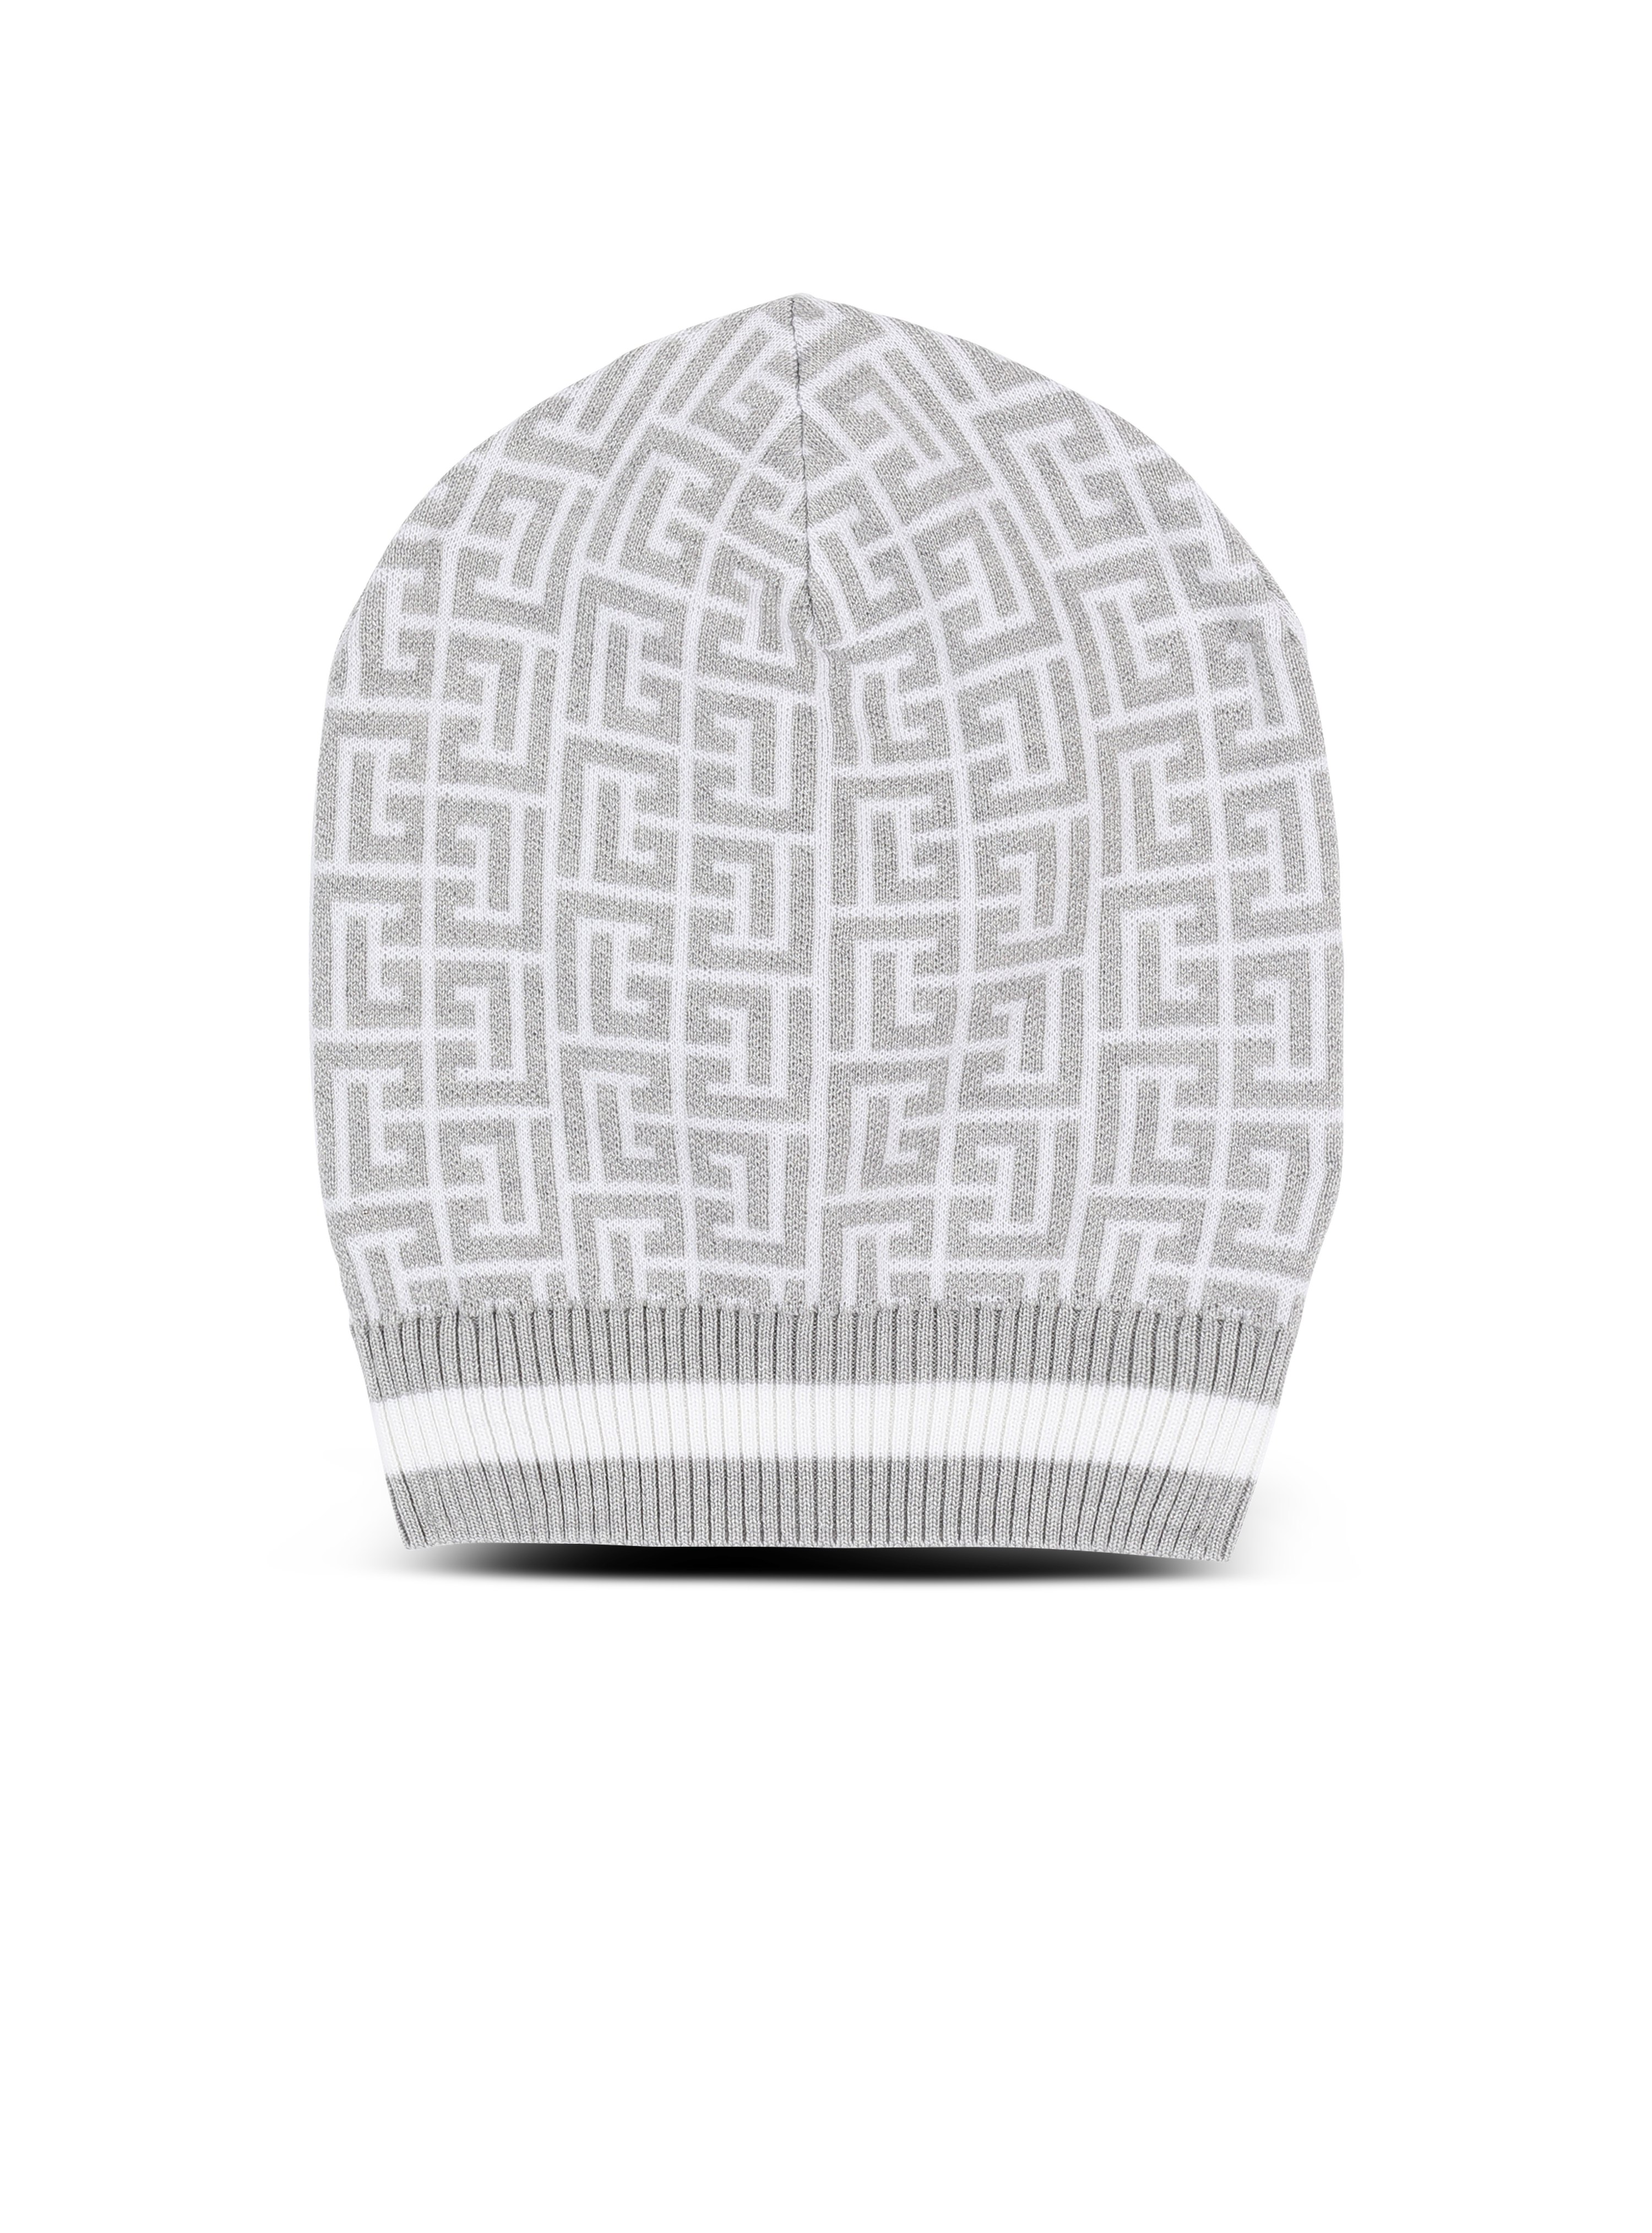 Wool hat with Balmain monogram, silver